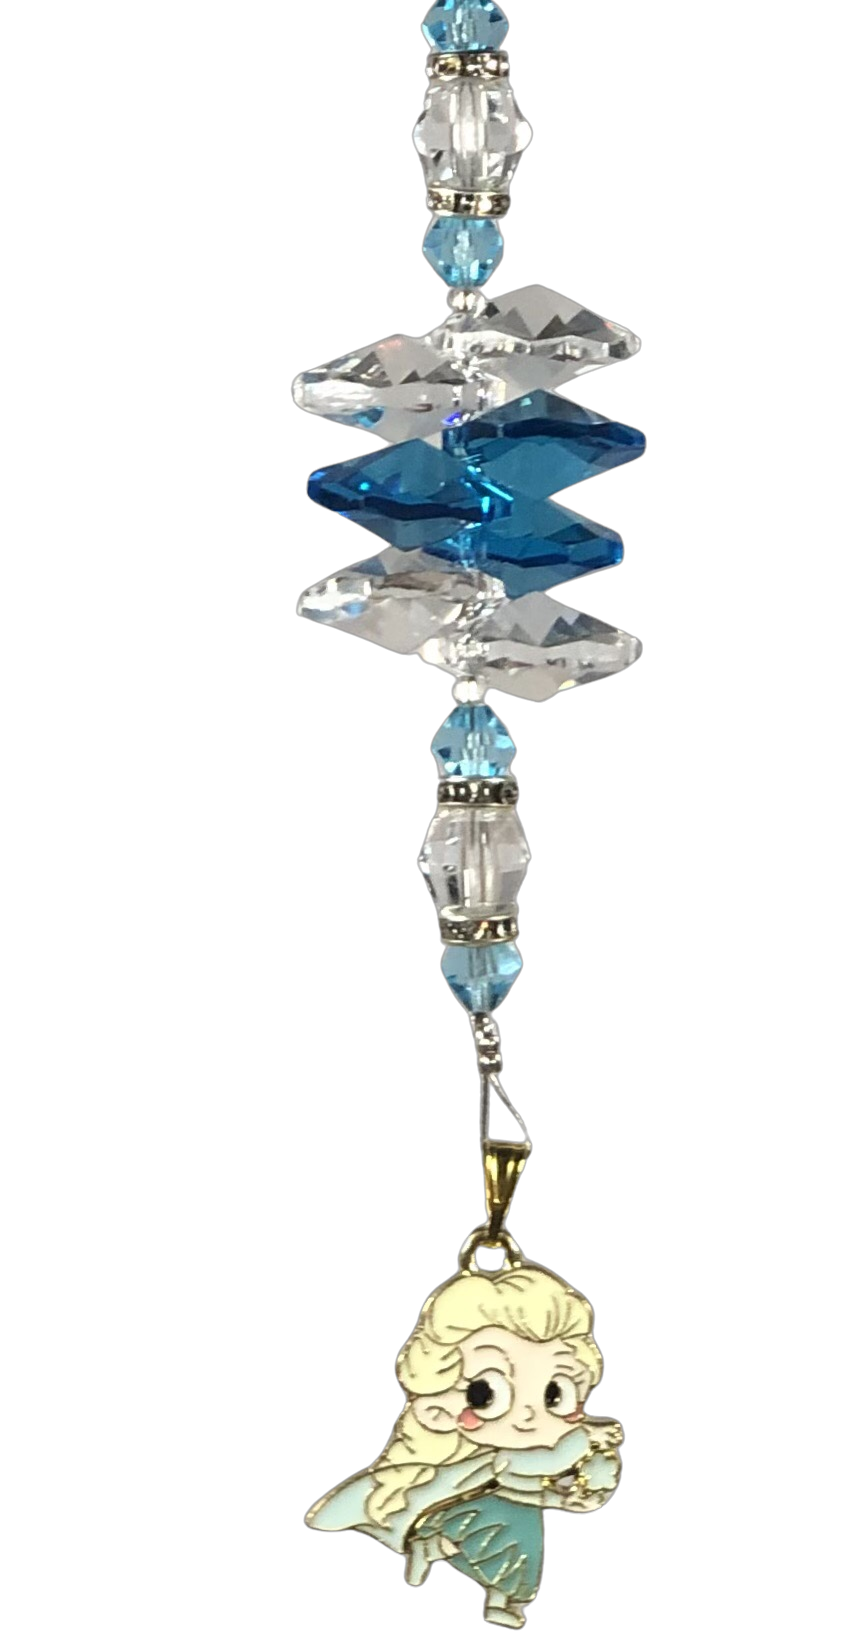 Frozen Elsa - crystal suncatcher, decorated with Turquoise gemstone